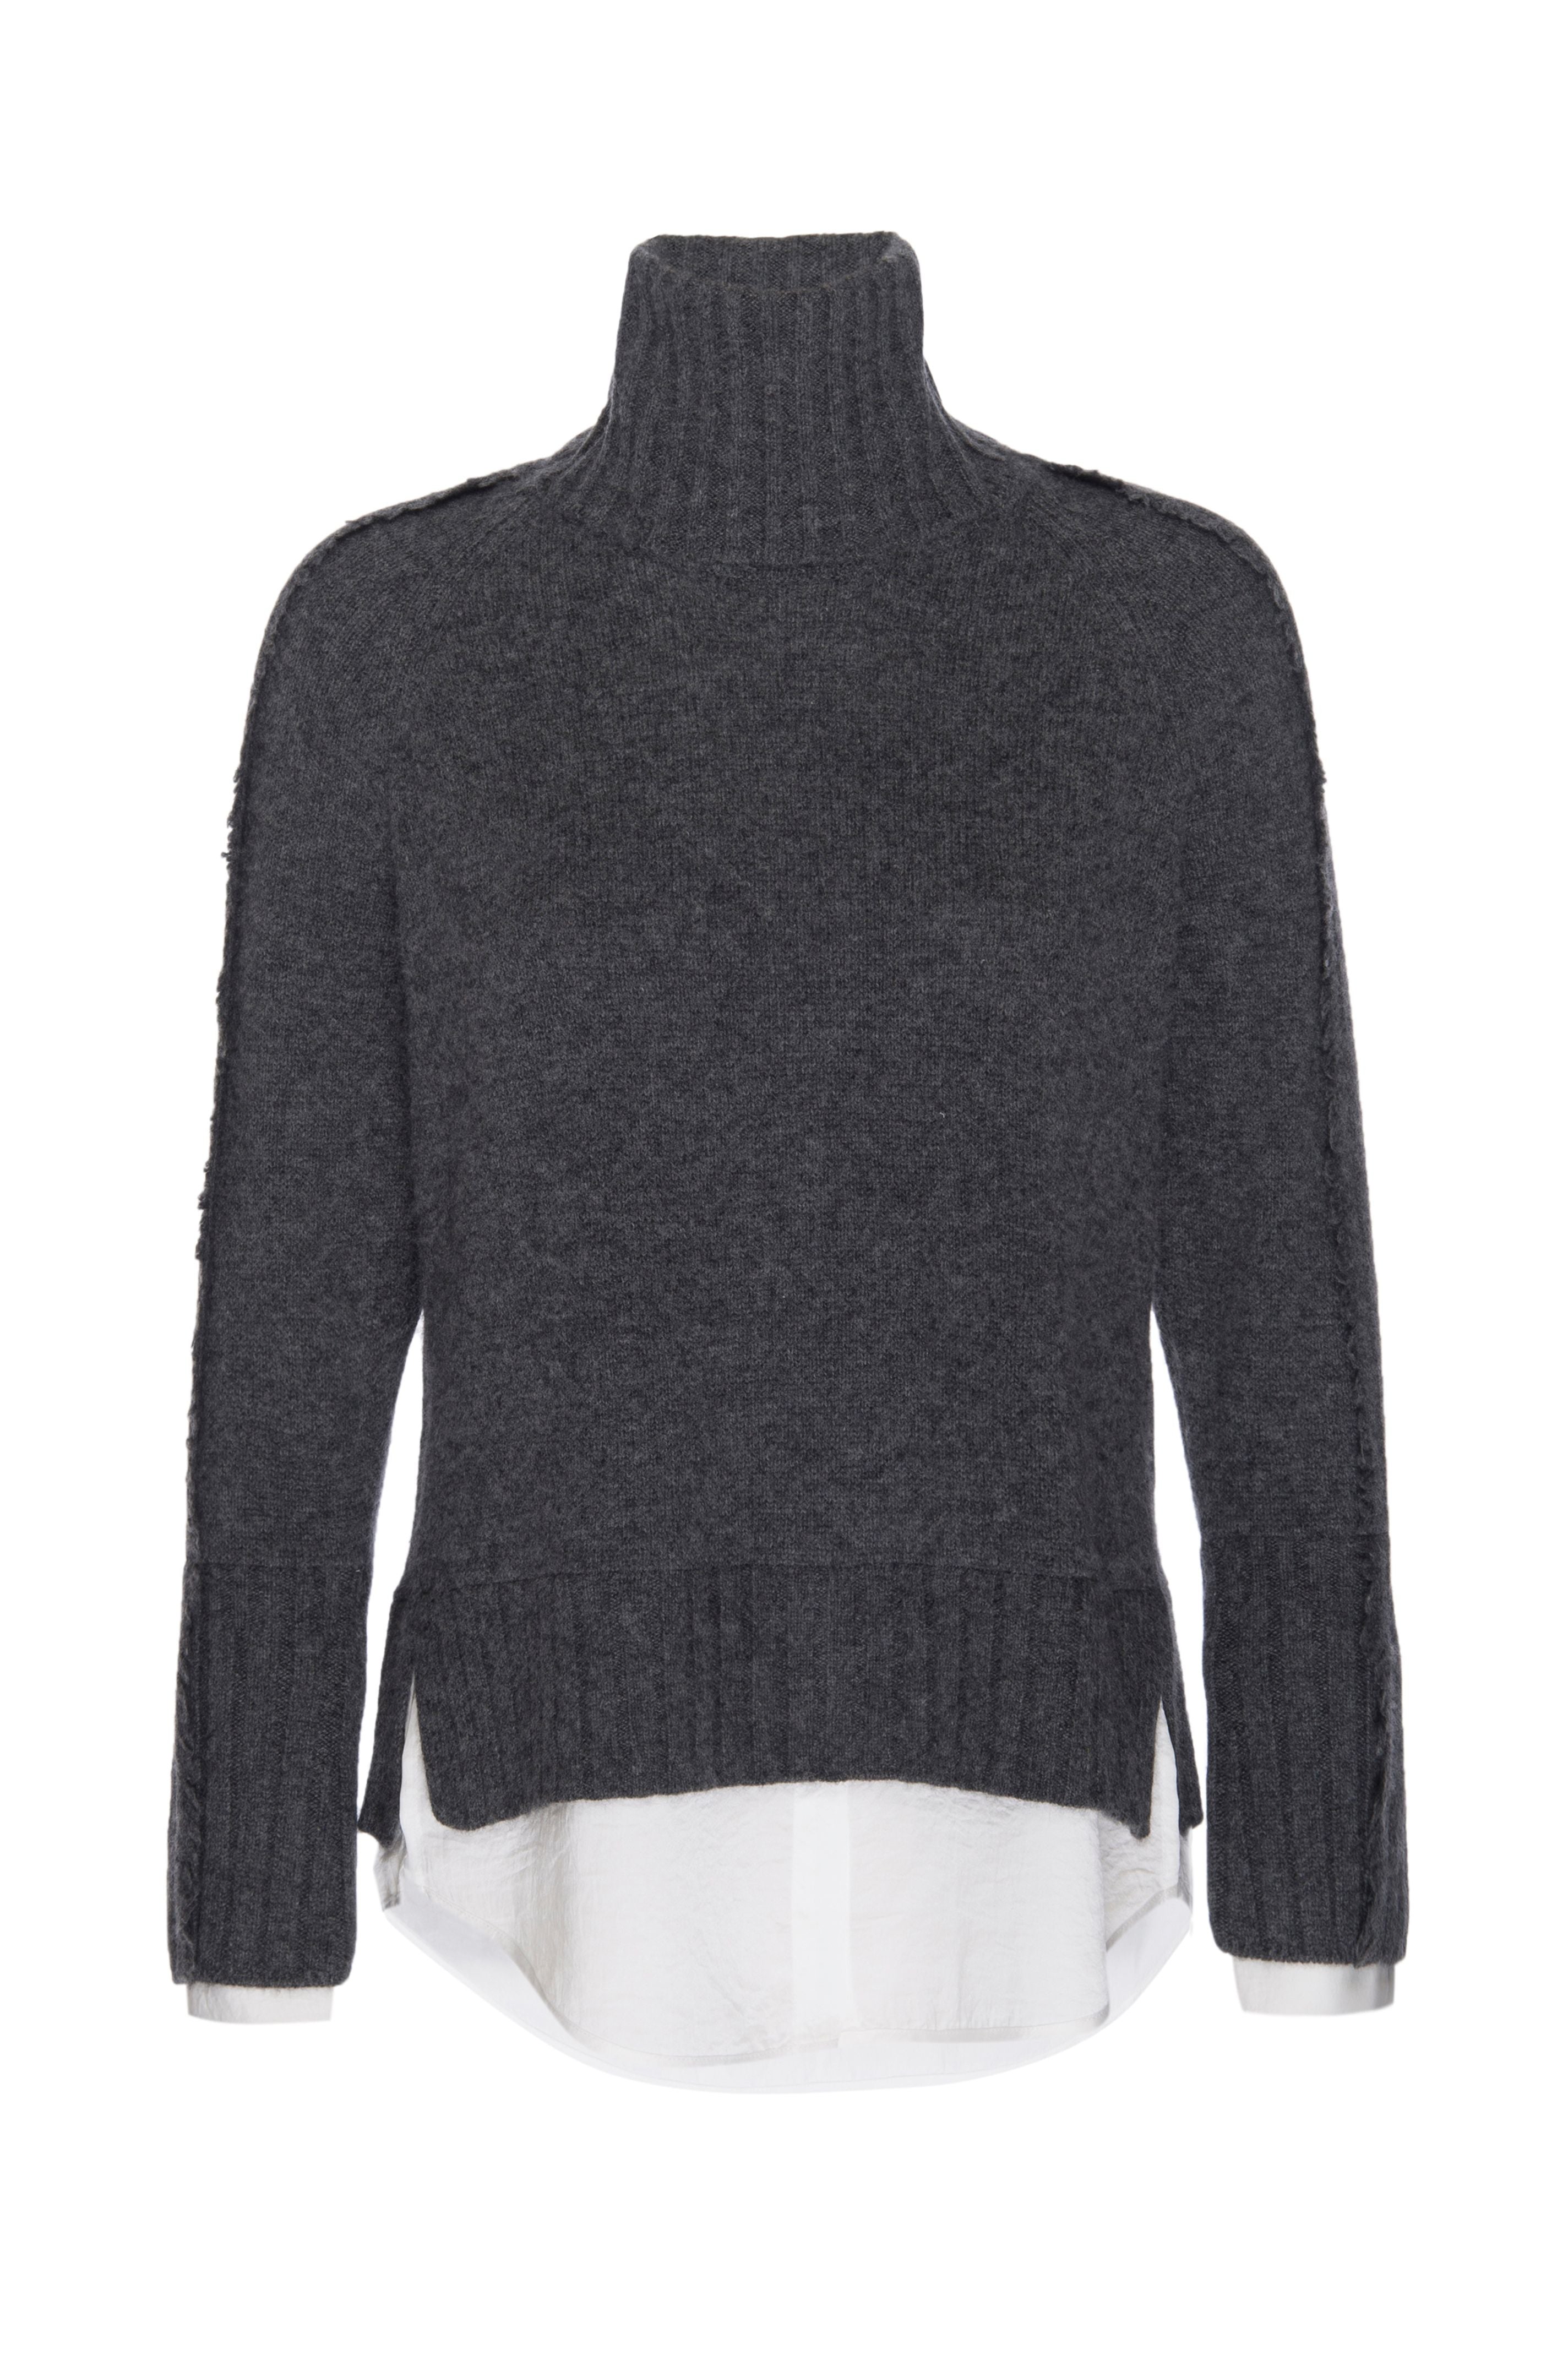 Jolie dark grey layered turtleneck sweater flat view